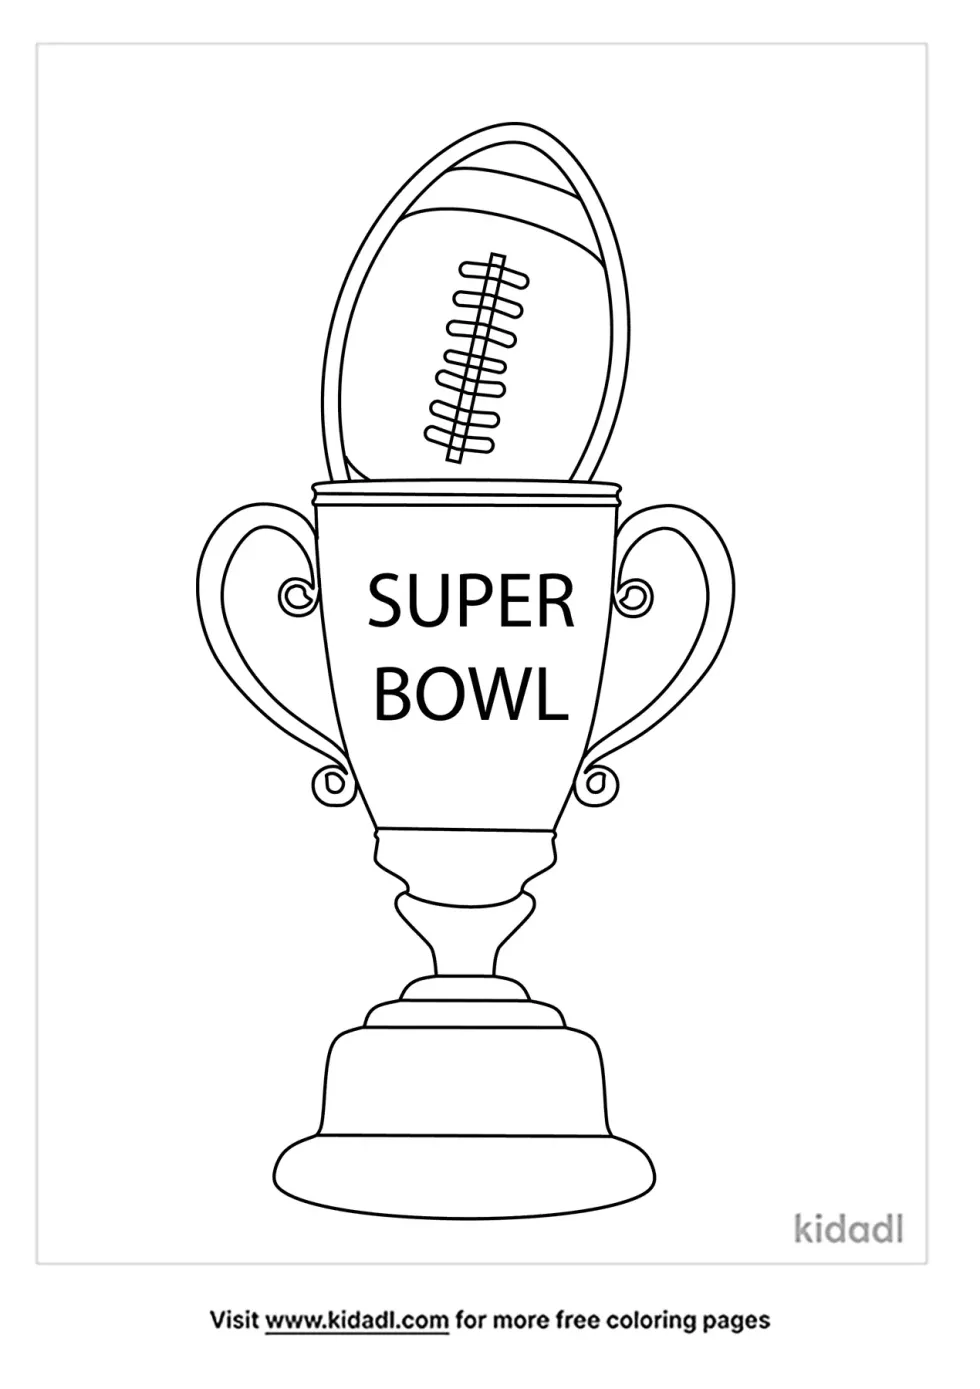 Super Bowl Coloring Page